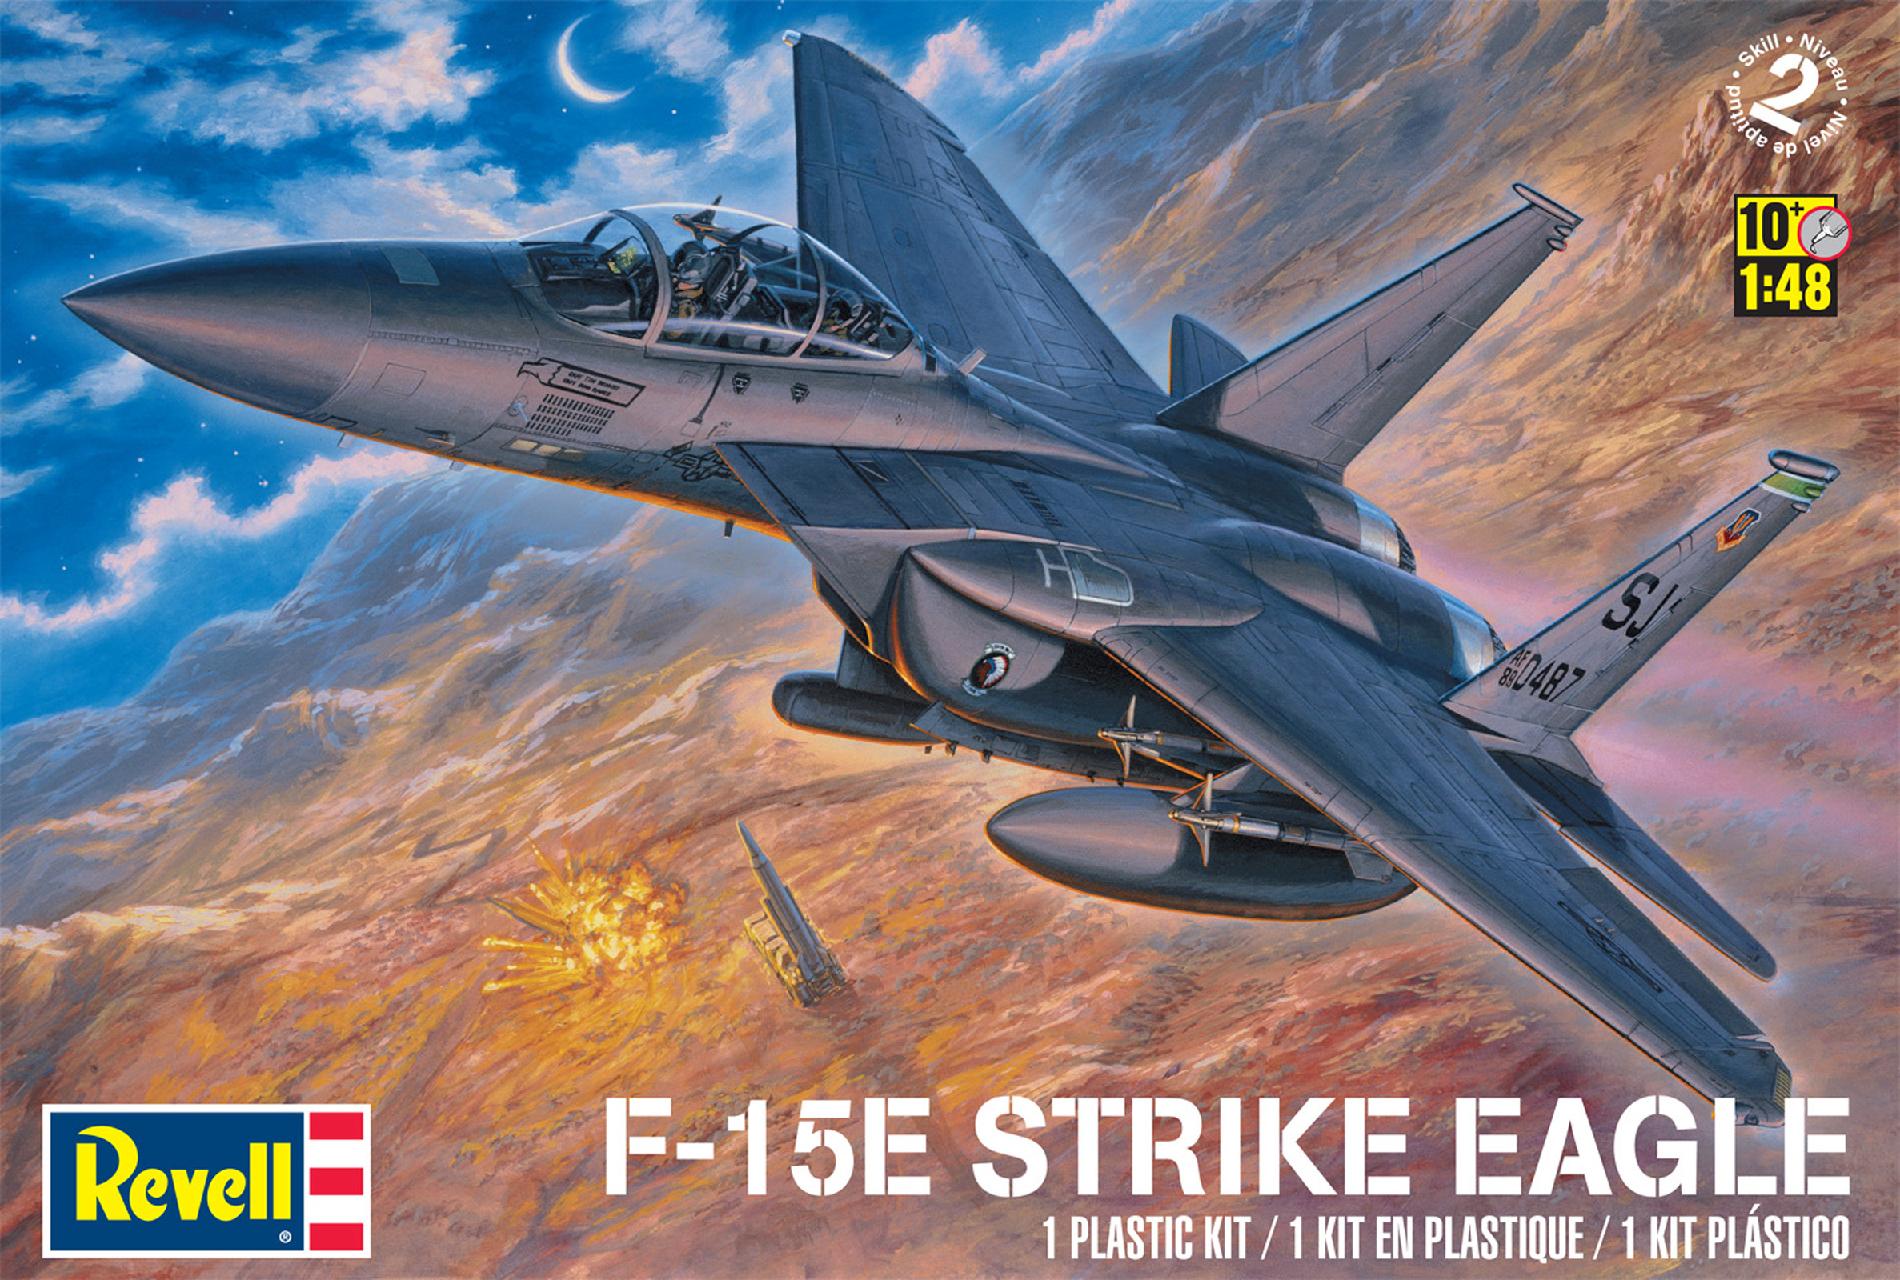 Revell 1:48 Scale F15E Strike Eagle Model Kit